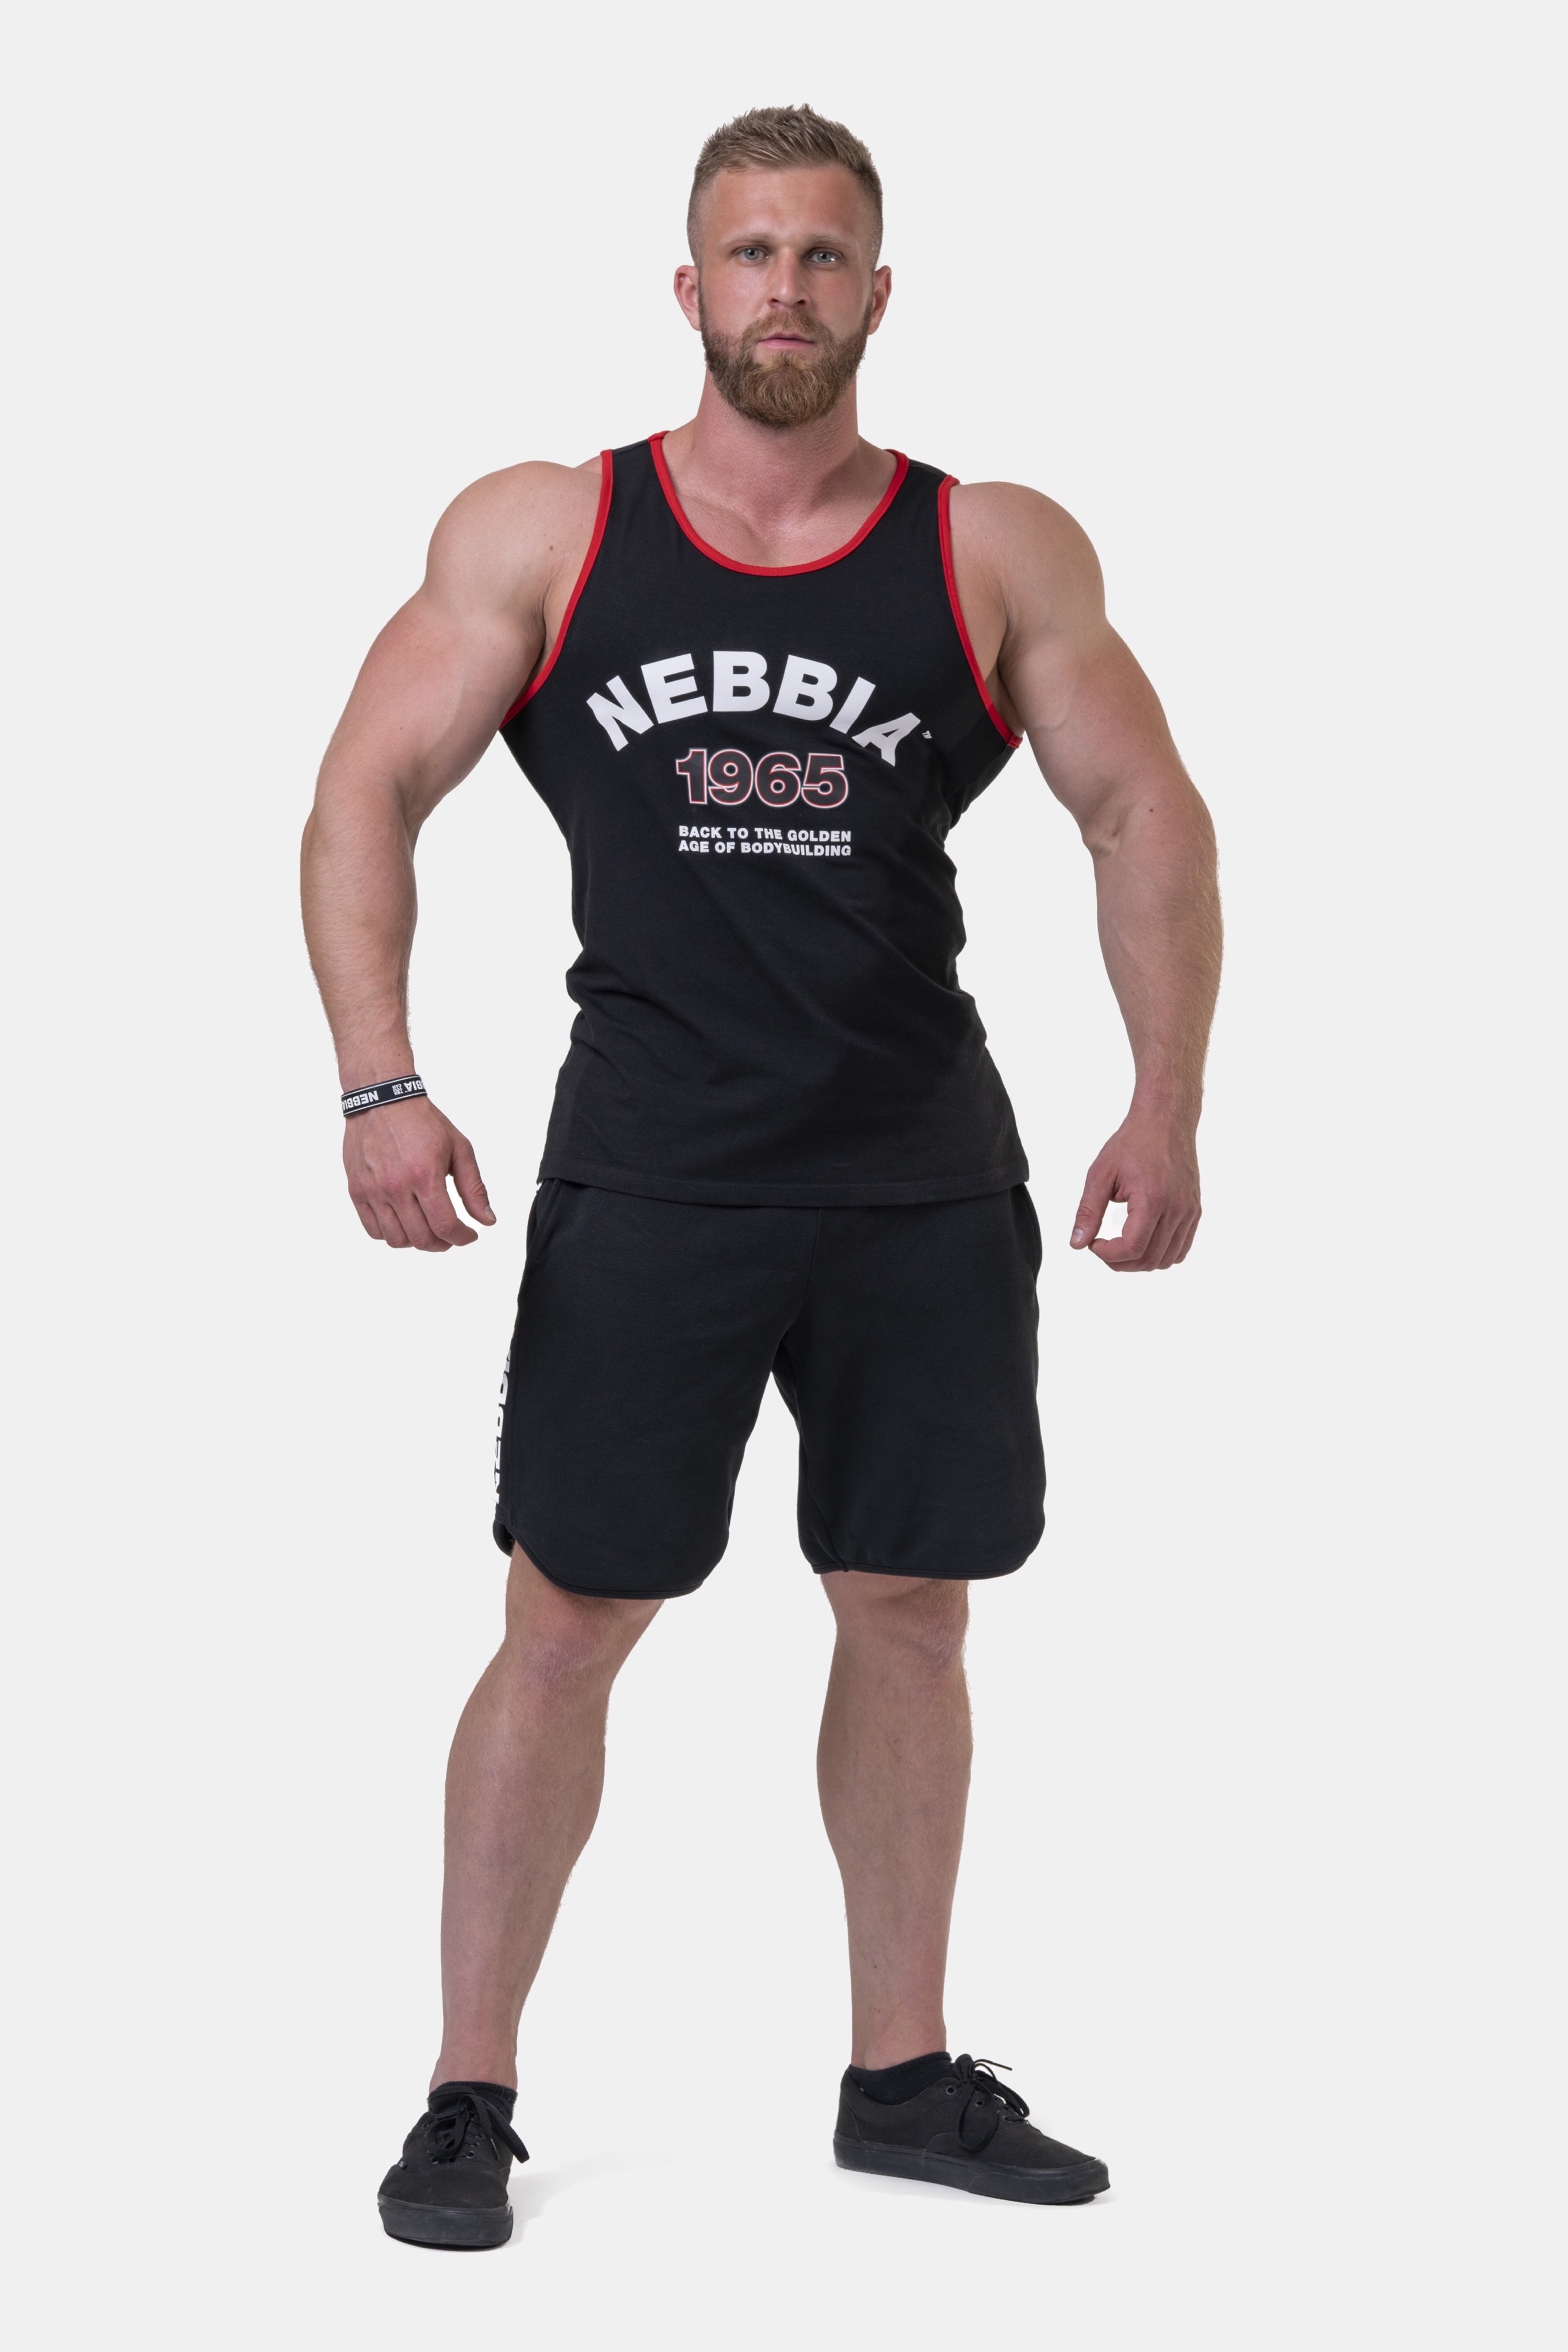 nebbia-ferfi-edz-triko-old-school-muscle-193-black